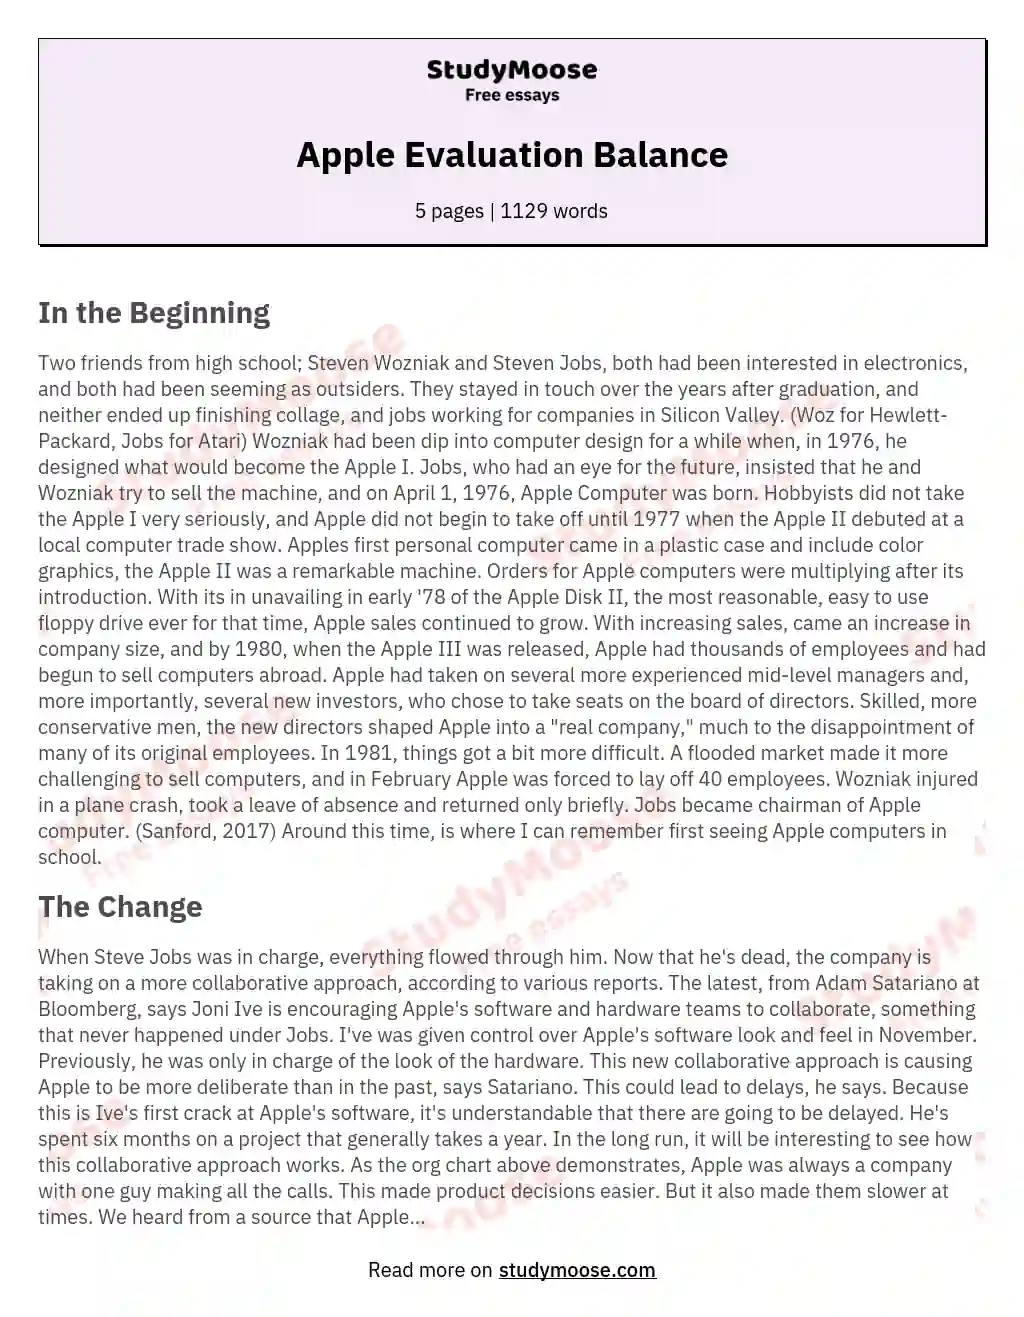 Apple Evaluation Balance essay